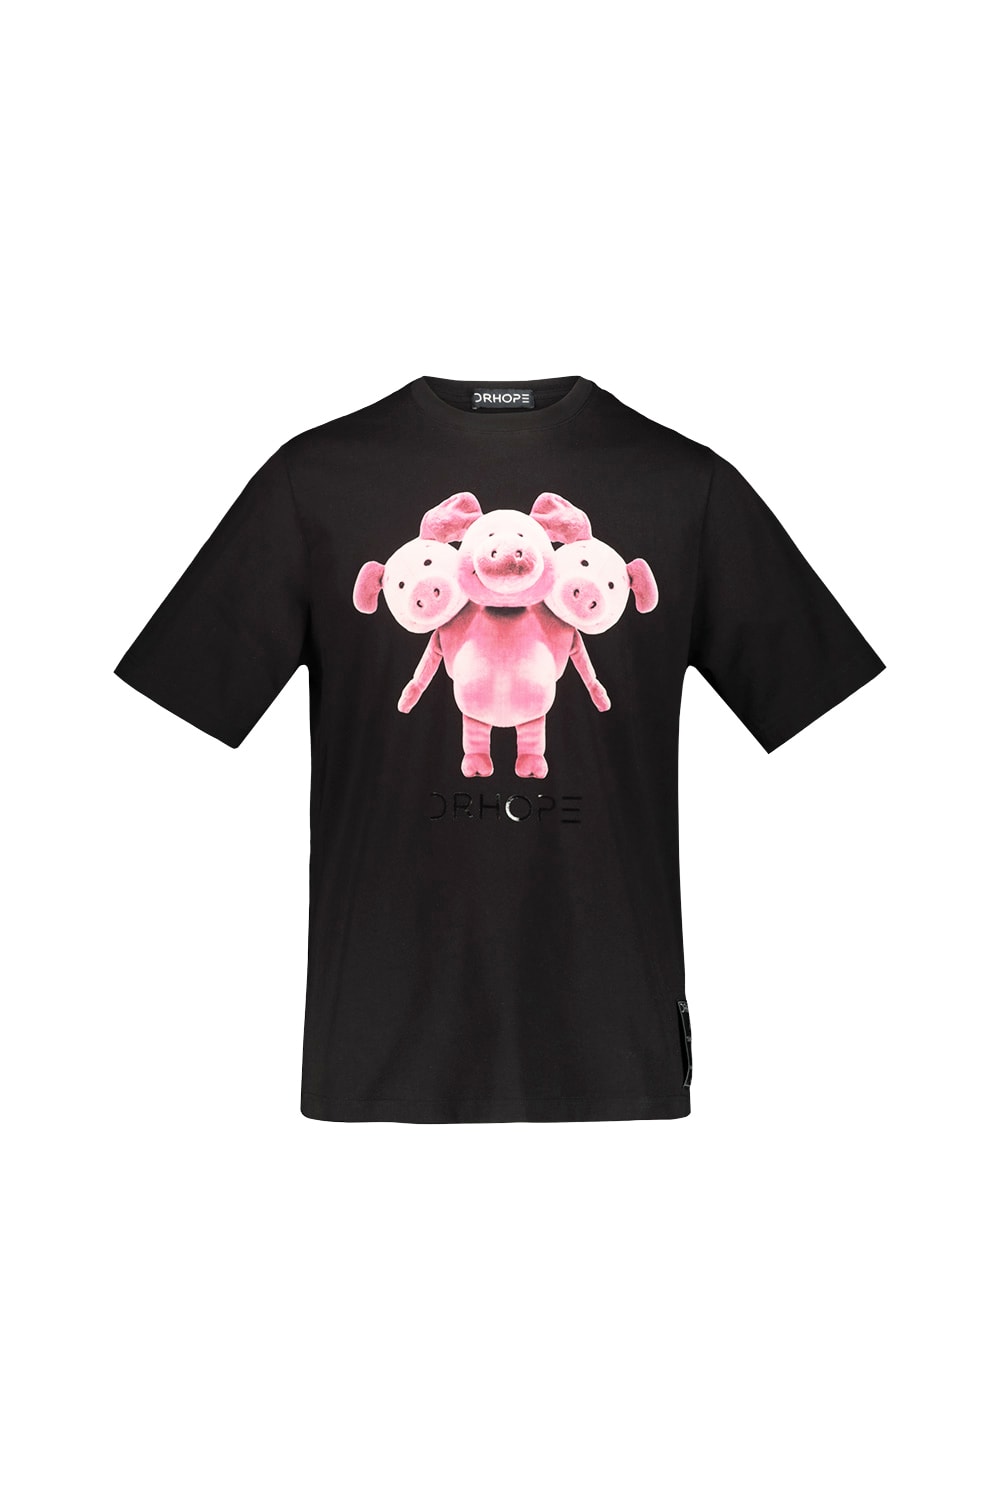 Drhope Black T-shirt With Pig Print